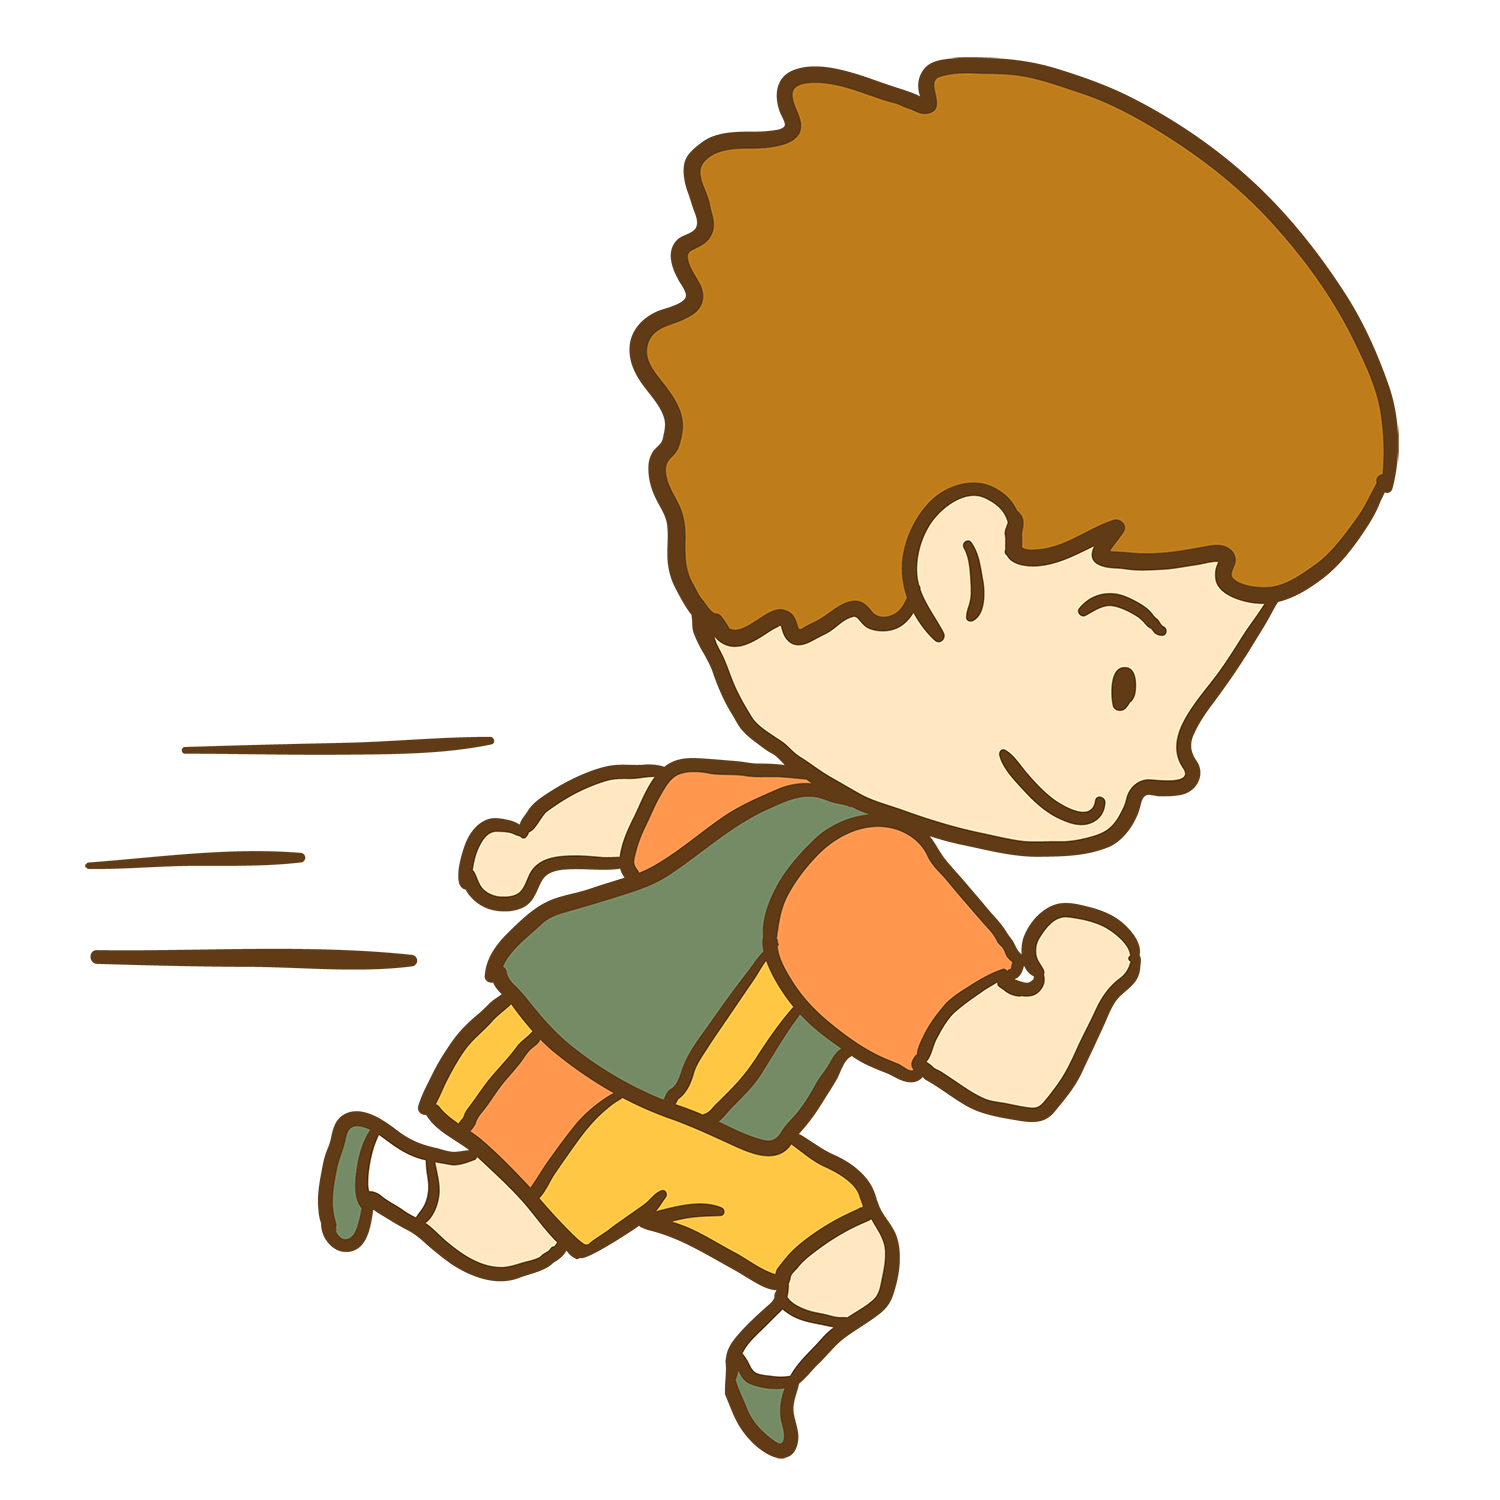 Running Cartoon Jogging Boy Runner - jogging png download - 1500*1500 ...